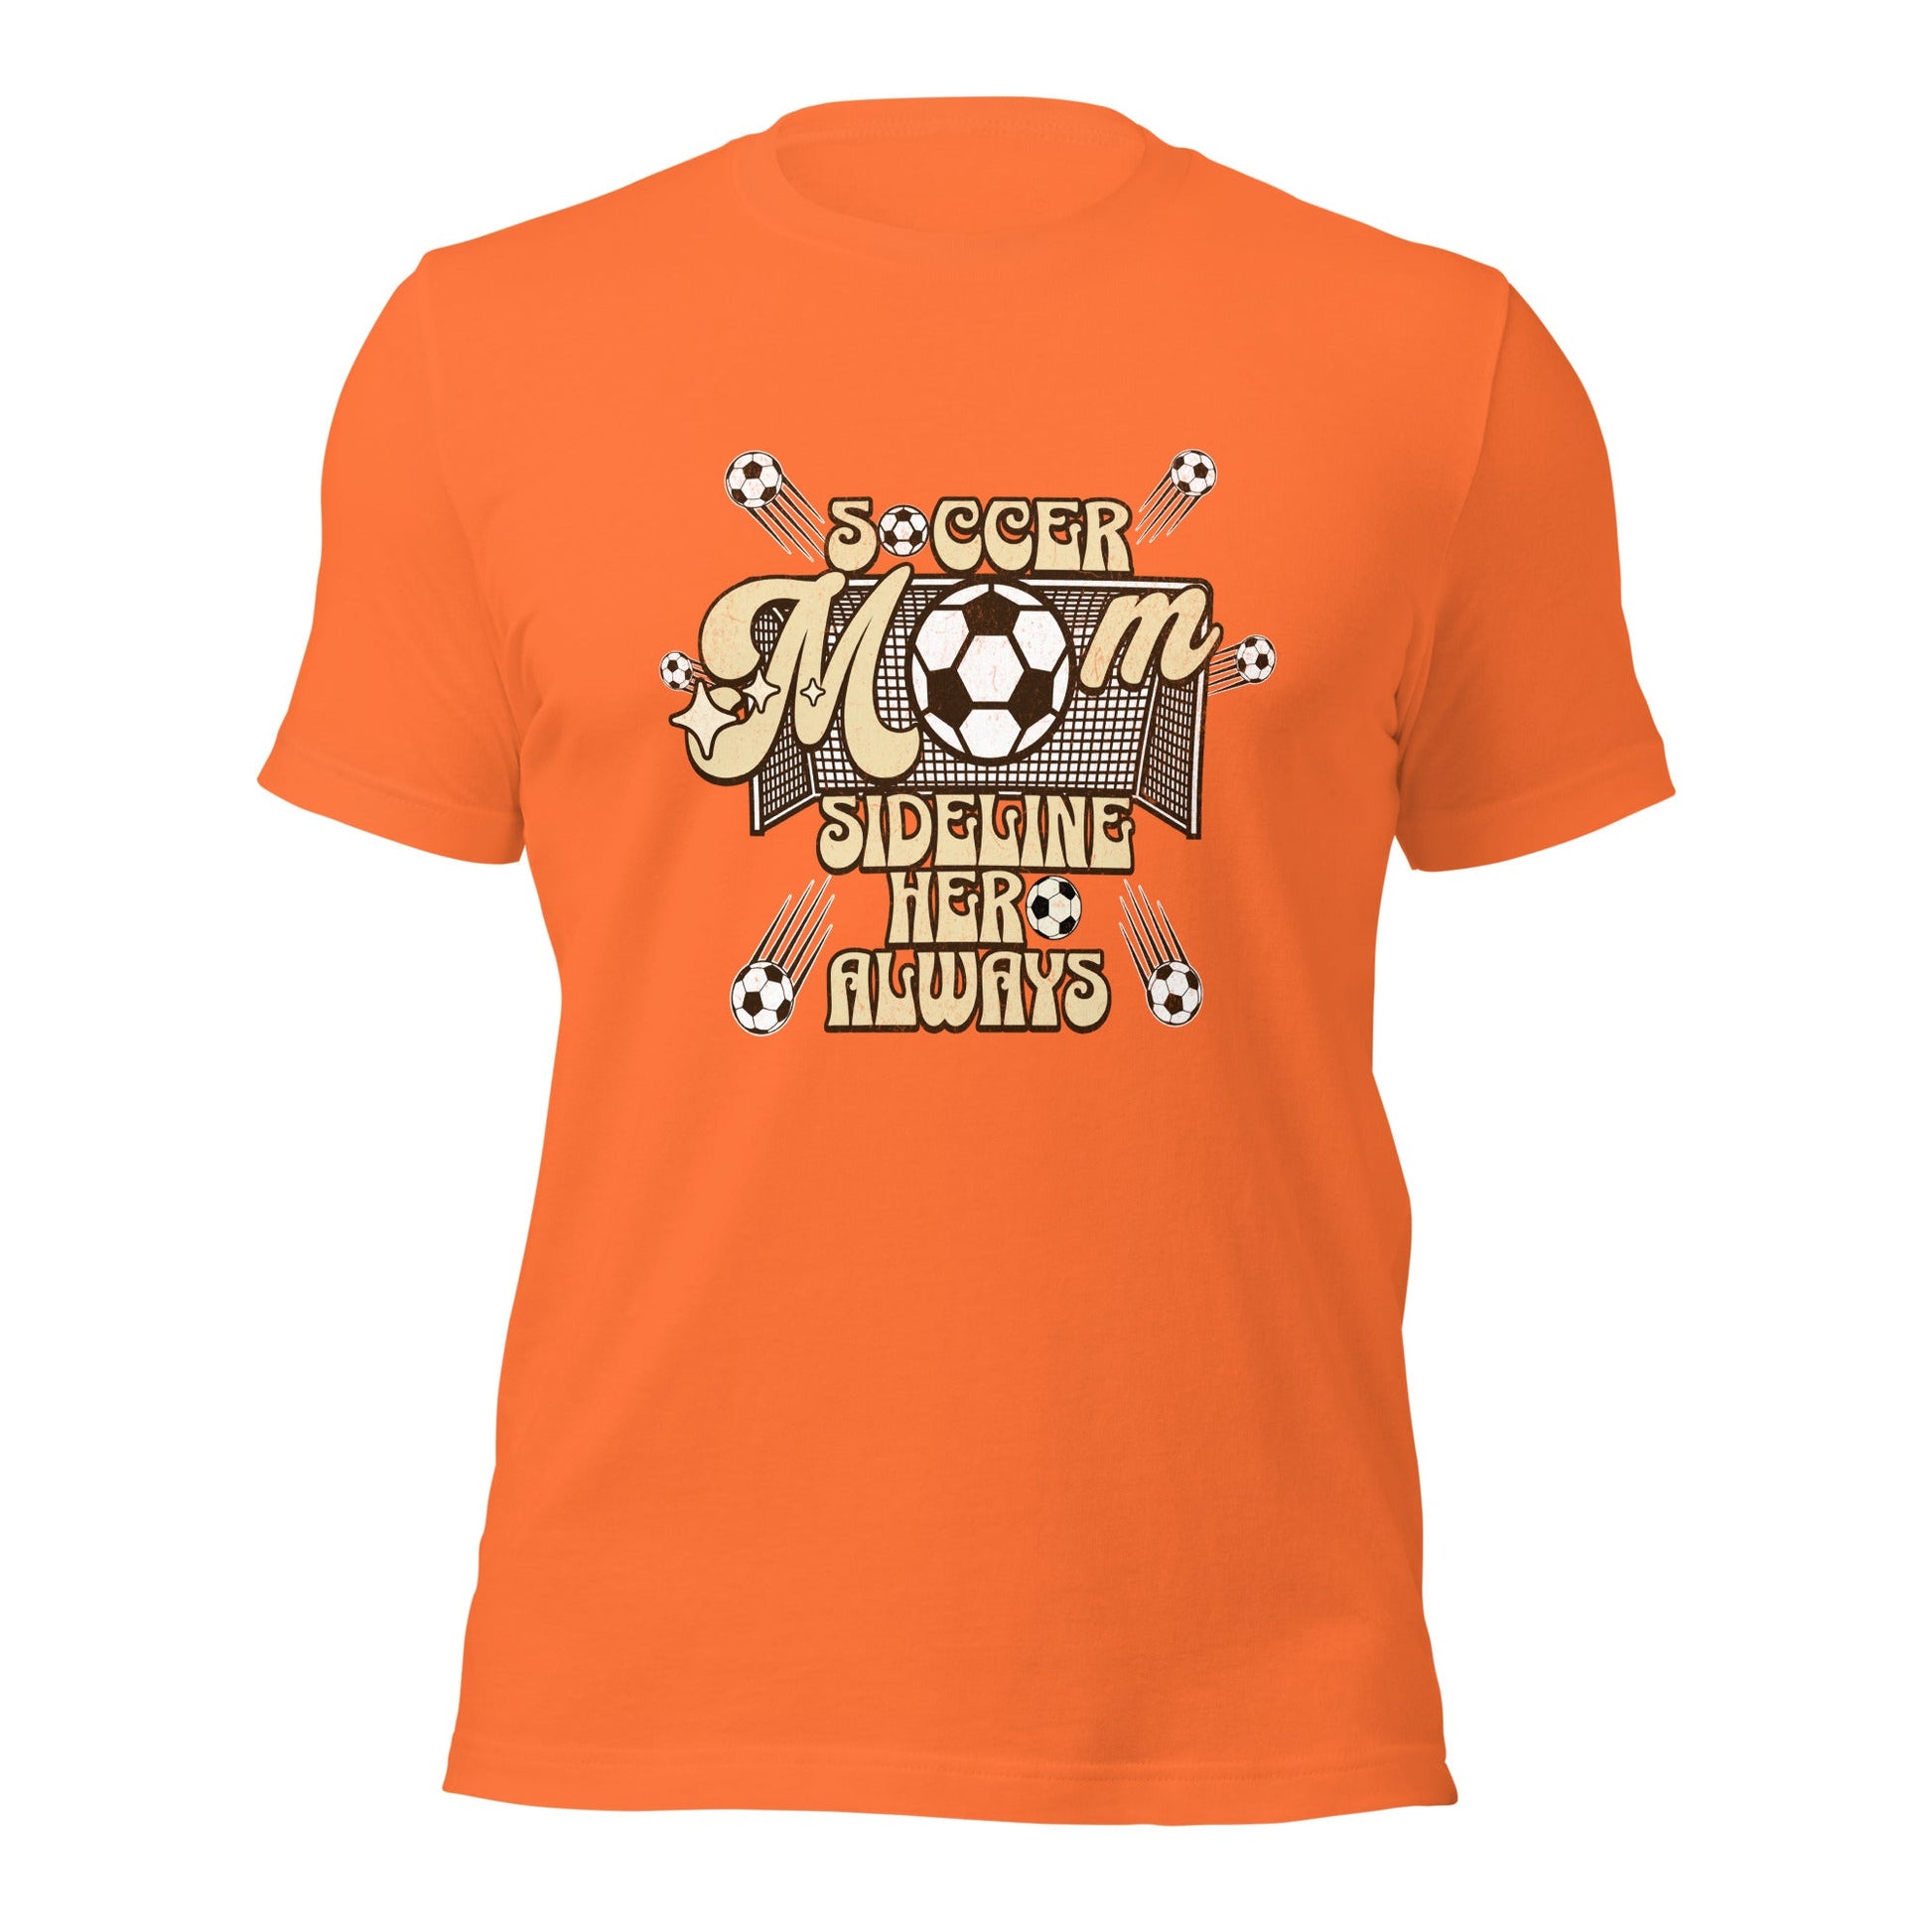 Soccer MOM Sideline Hero Always T-shirt-Orange-S-mysticalcherry